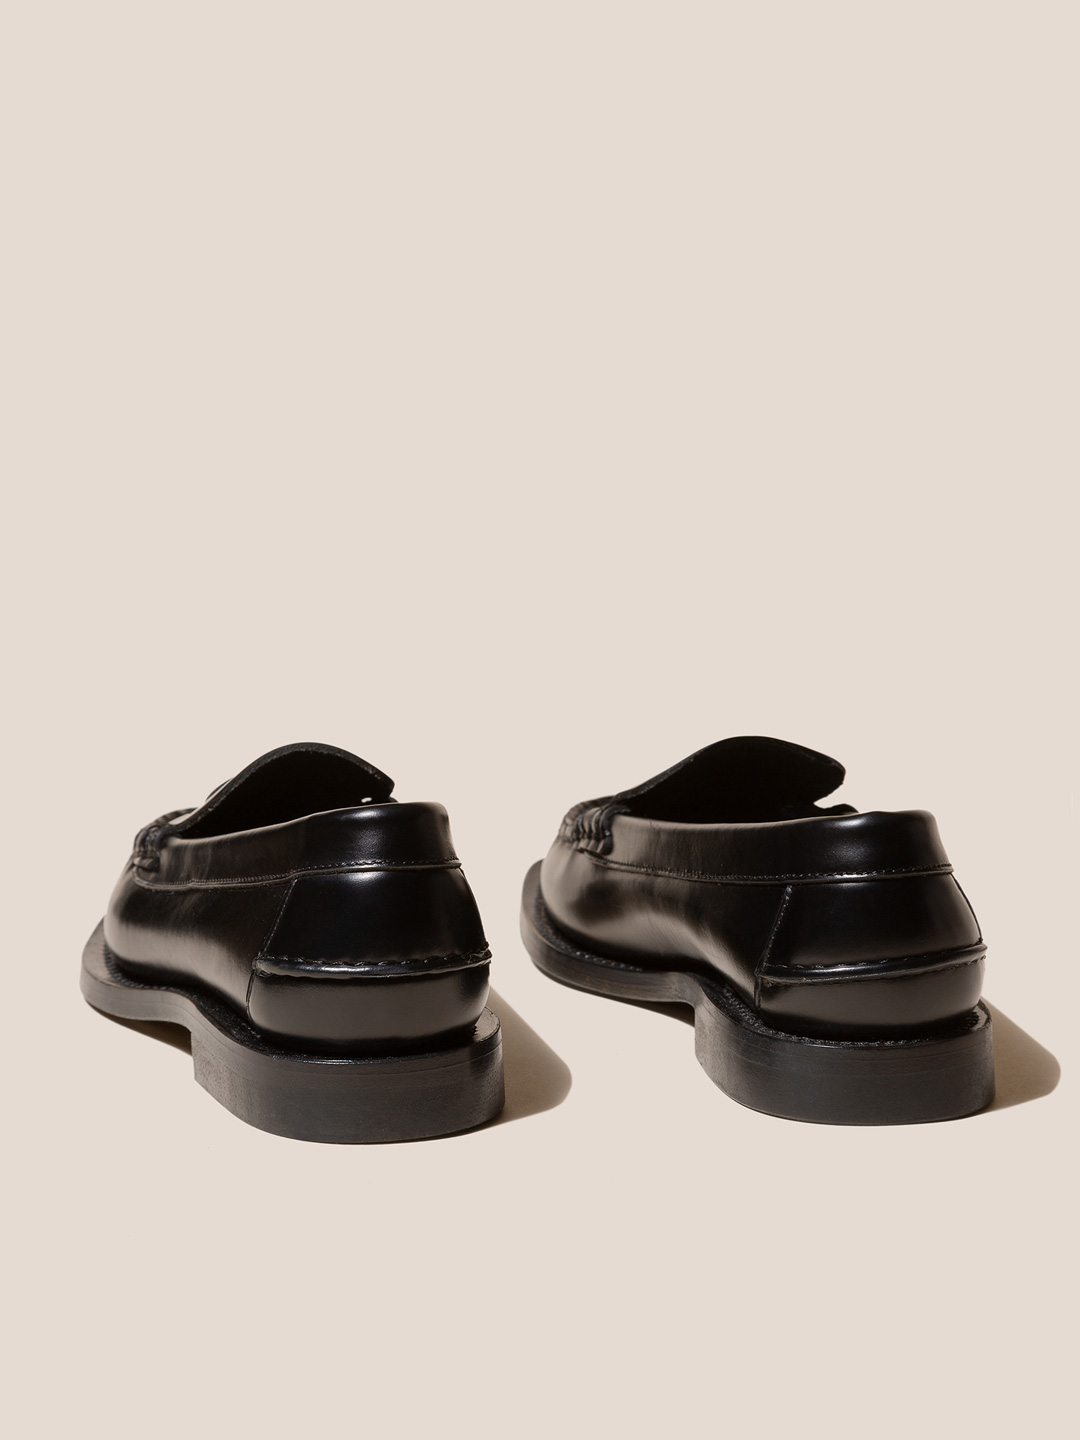 SINEU - Men's Interlaced-detail Slip-on Loafer - Black